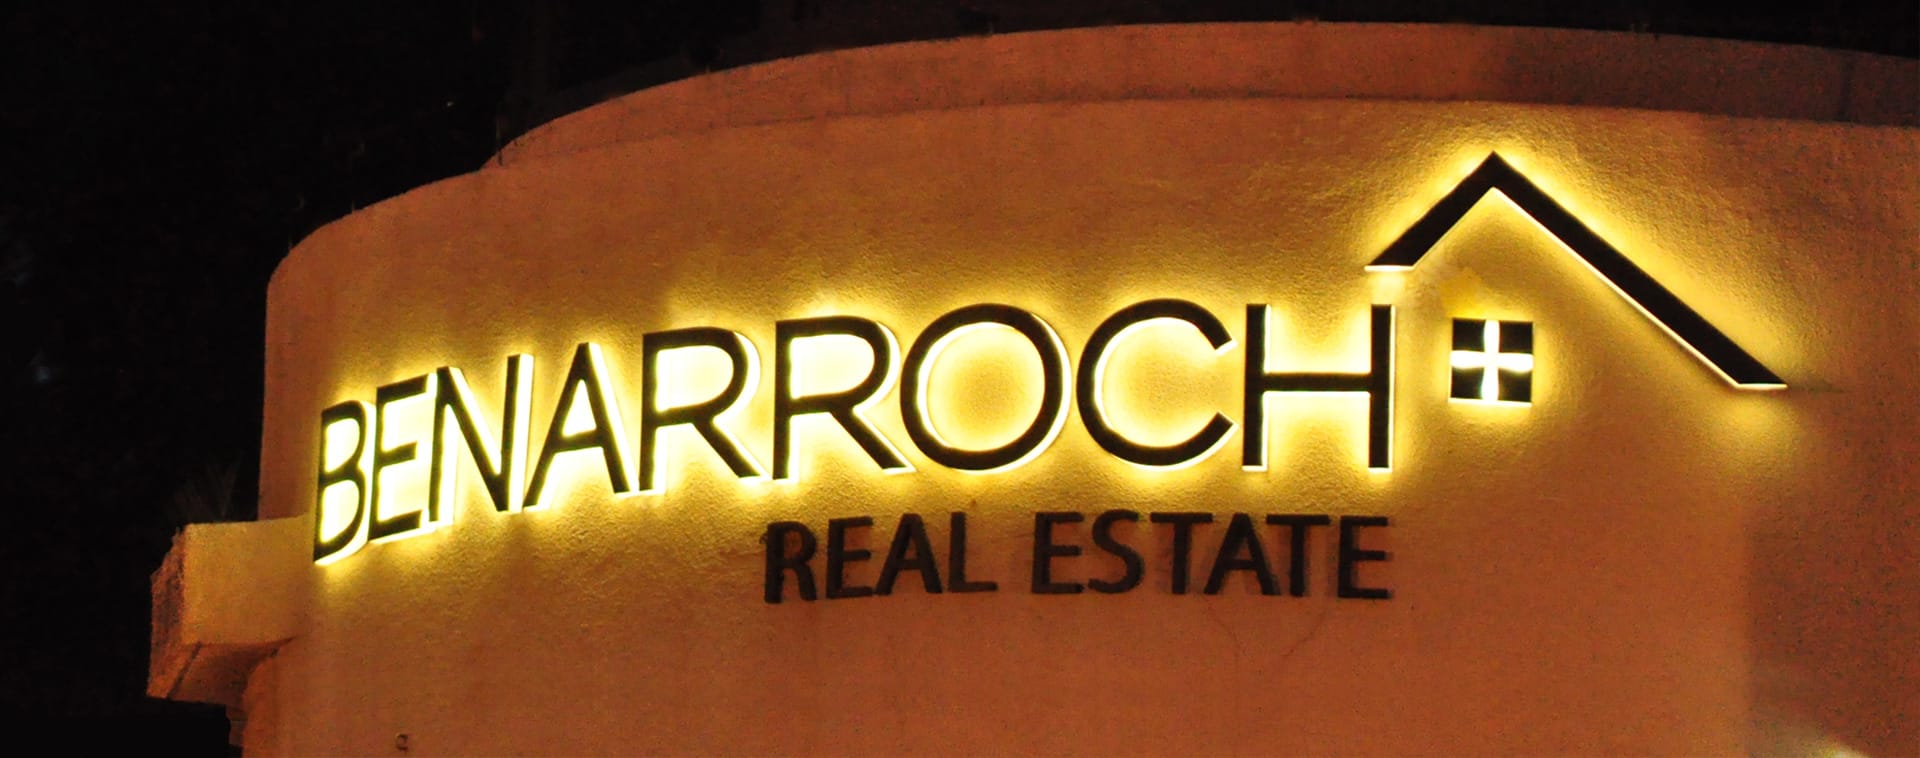 About Benarroch, Marbella Real Estate Agents